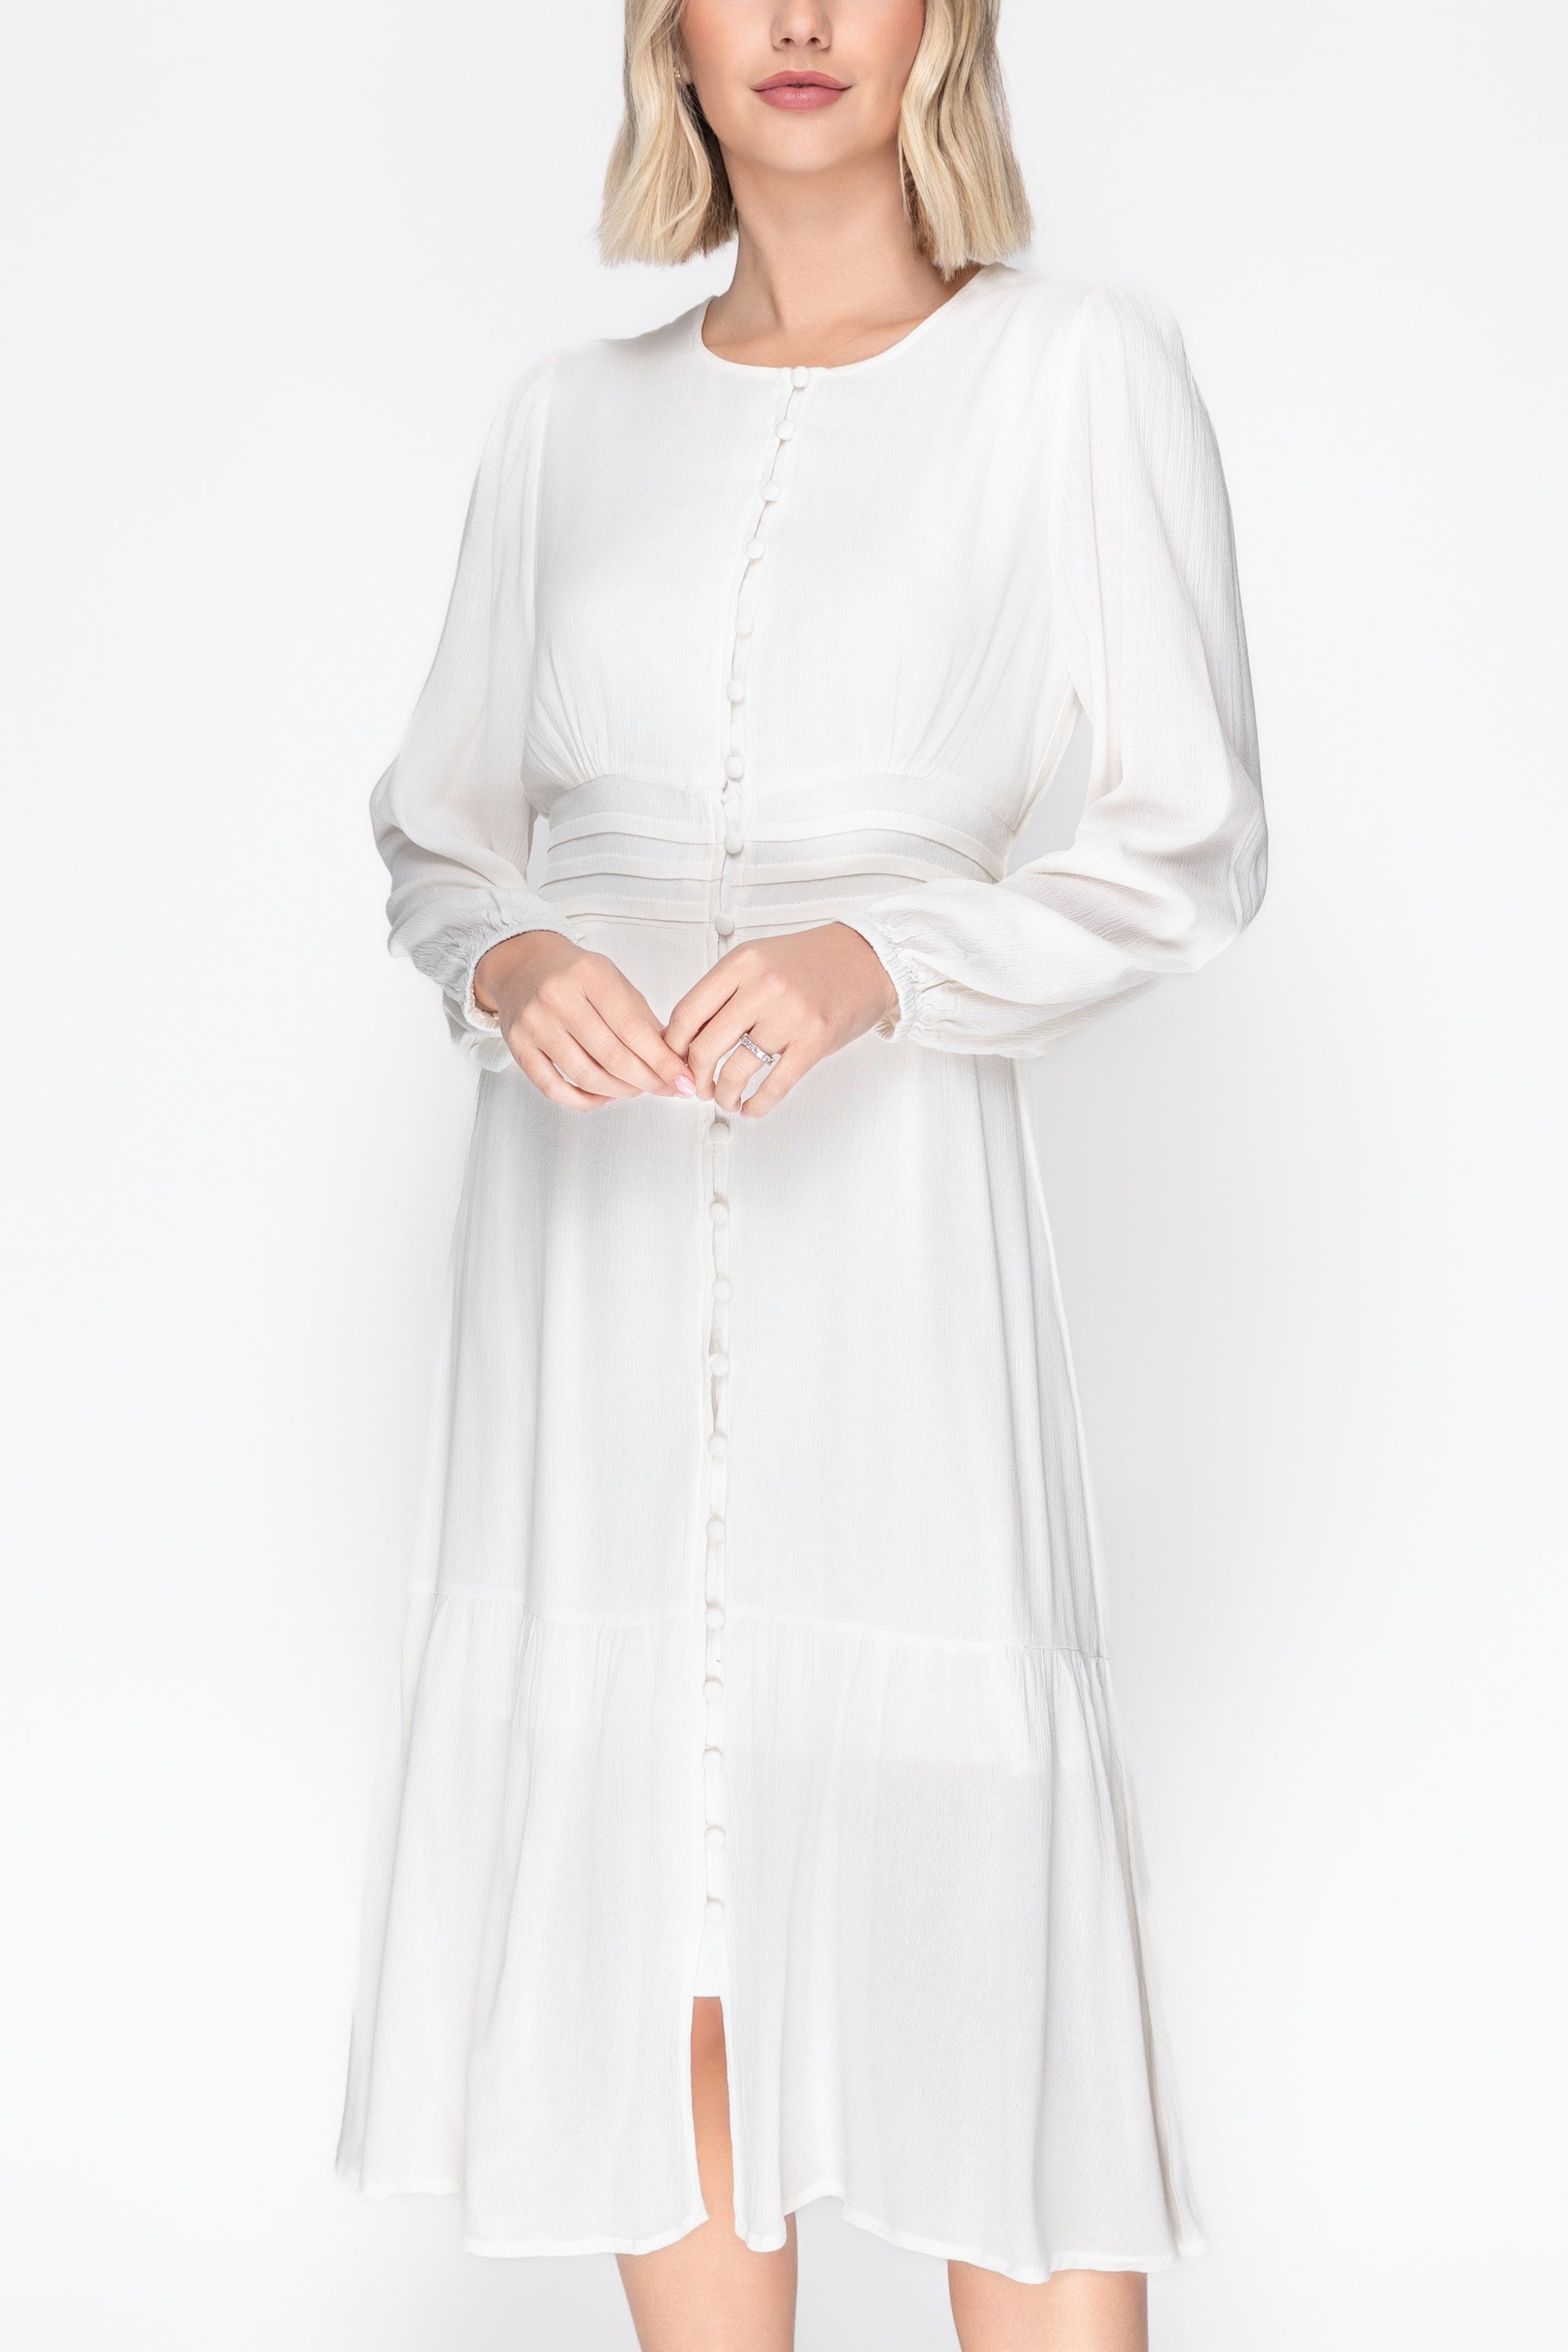 GWENYTH DRESS PETITE (OFF WHITE) 44&quot;